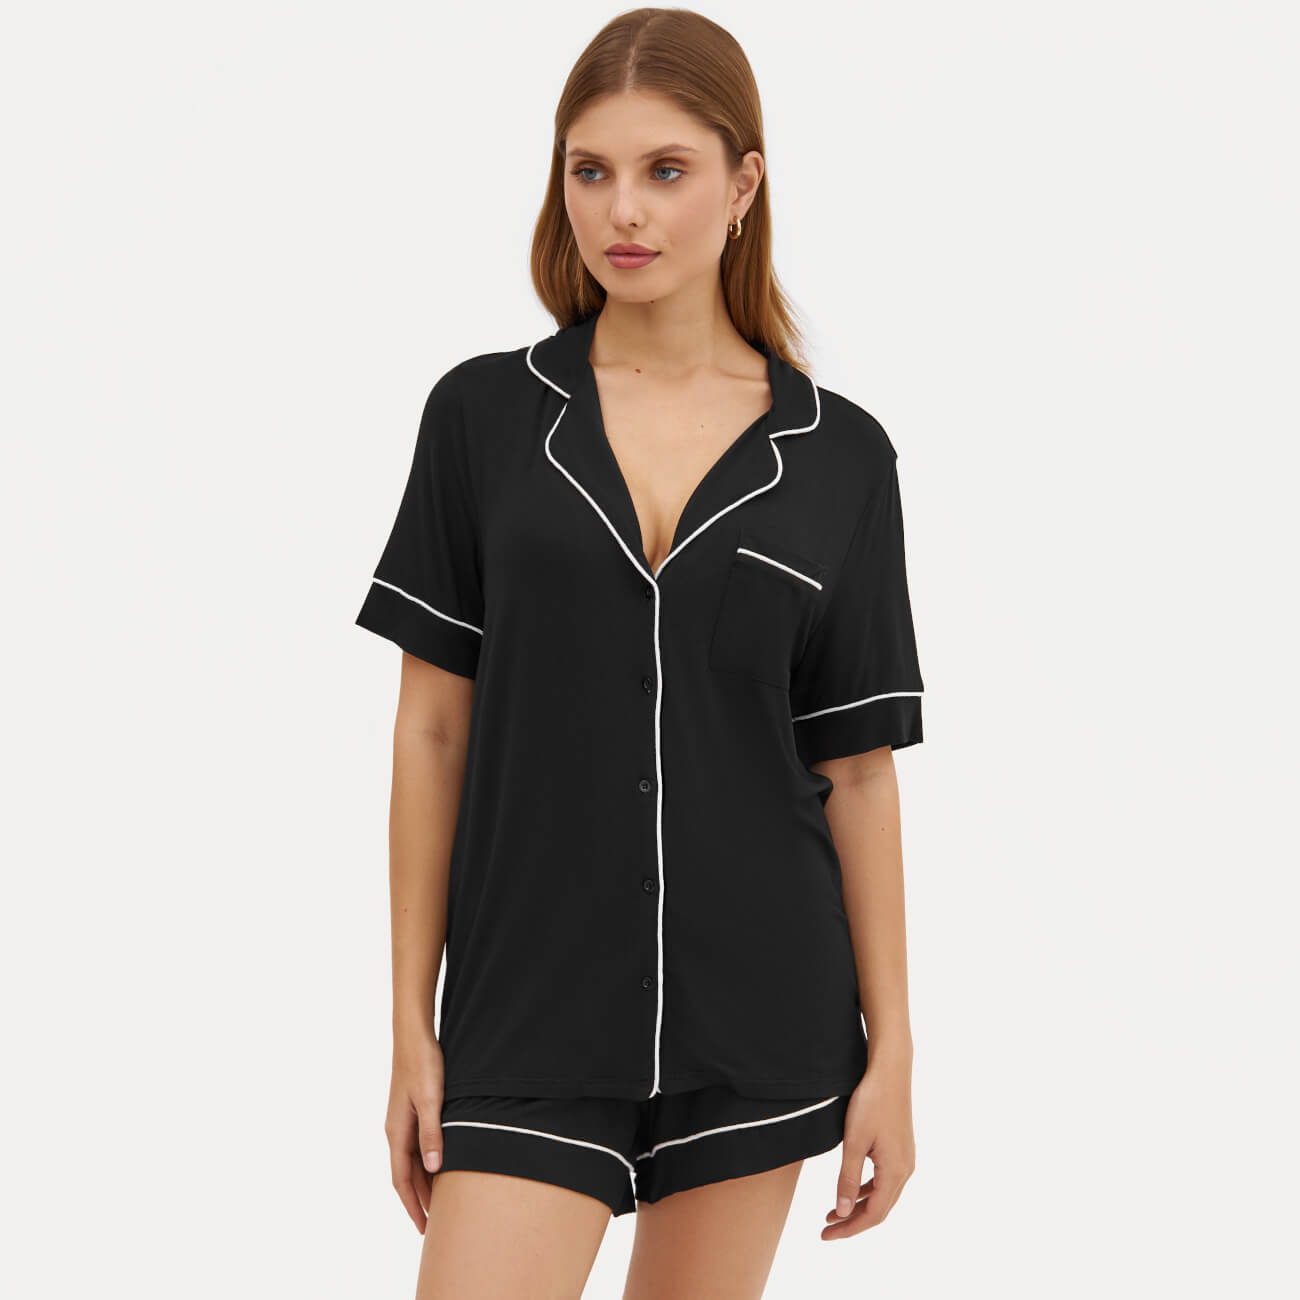 Рубашка женская, домашняя, р. S, с коротким рукавом, вискоза/эластан, черная, Rabia